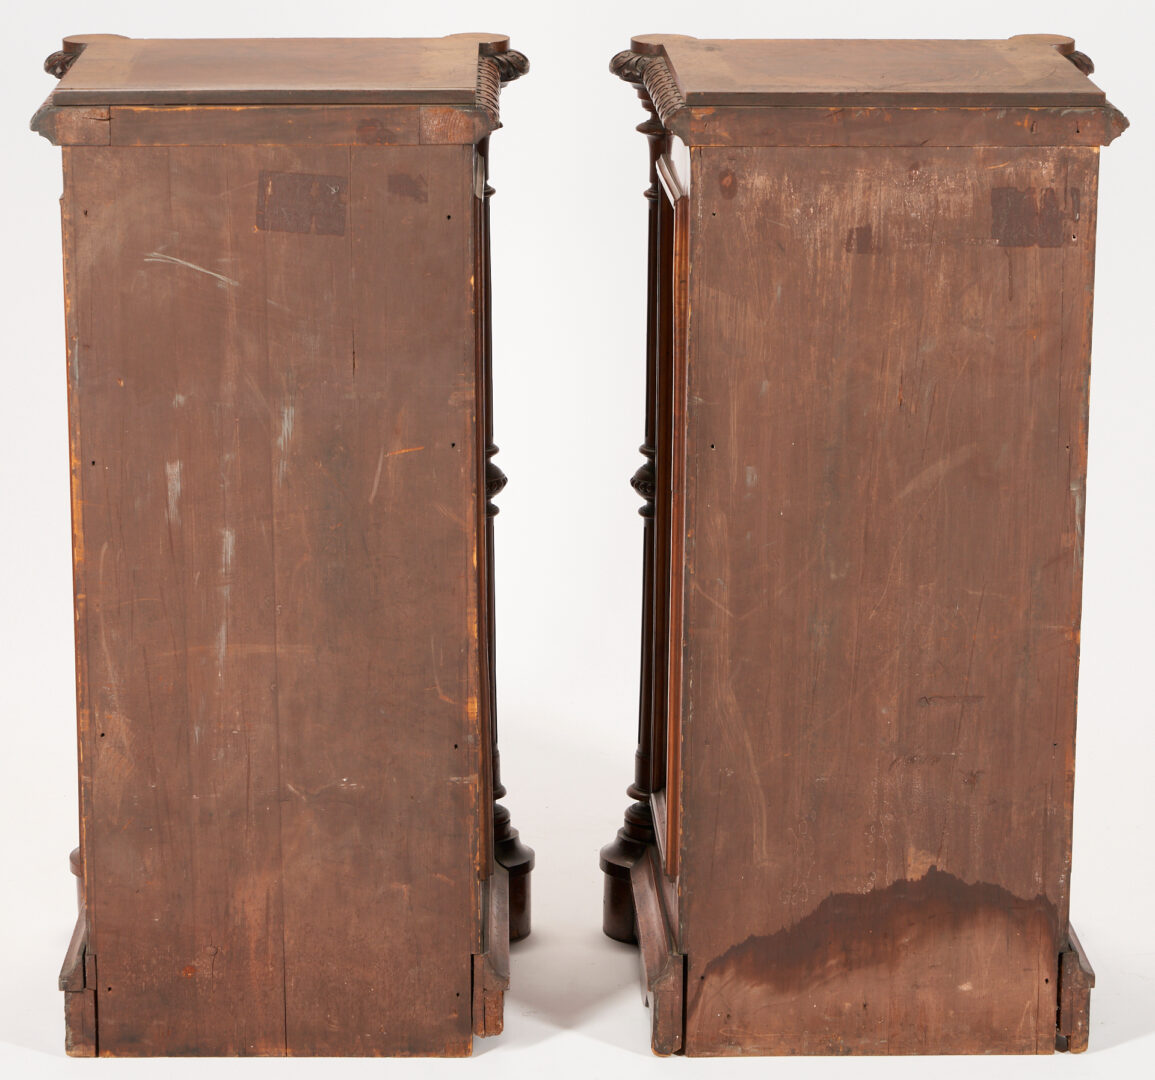 Lot 472: Pair of Continental Renaissance Revival Burlwood Pedestals